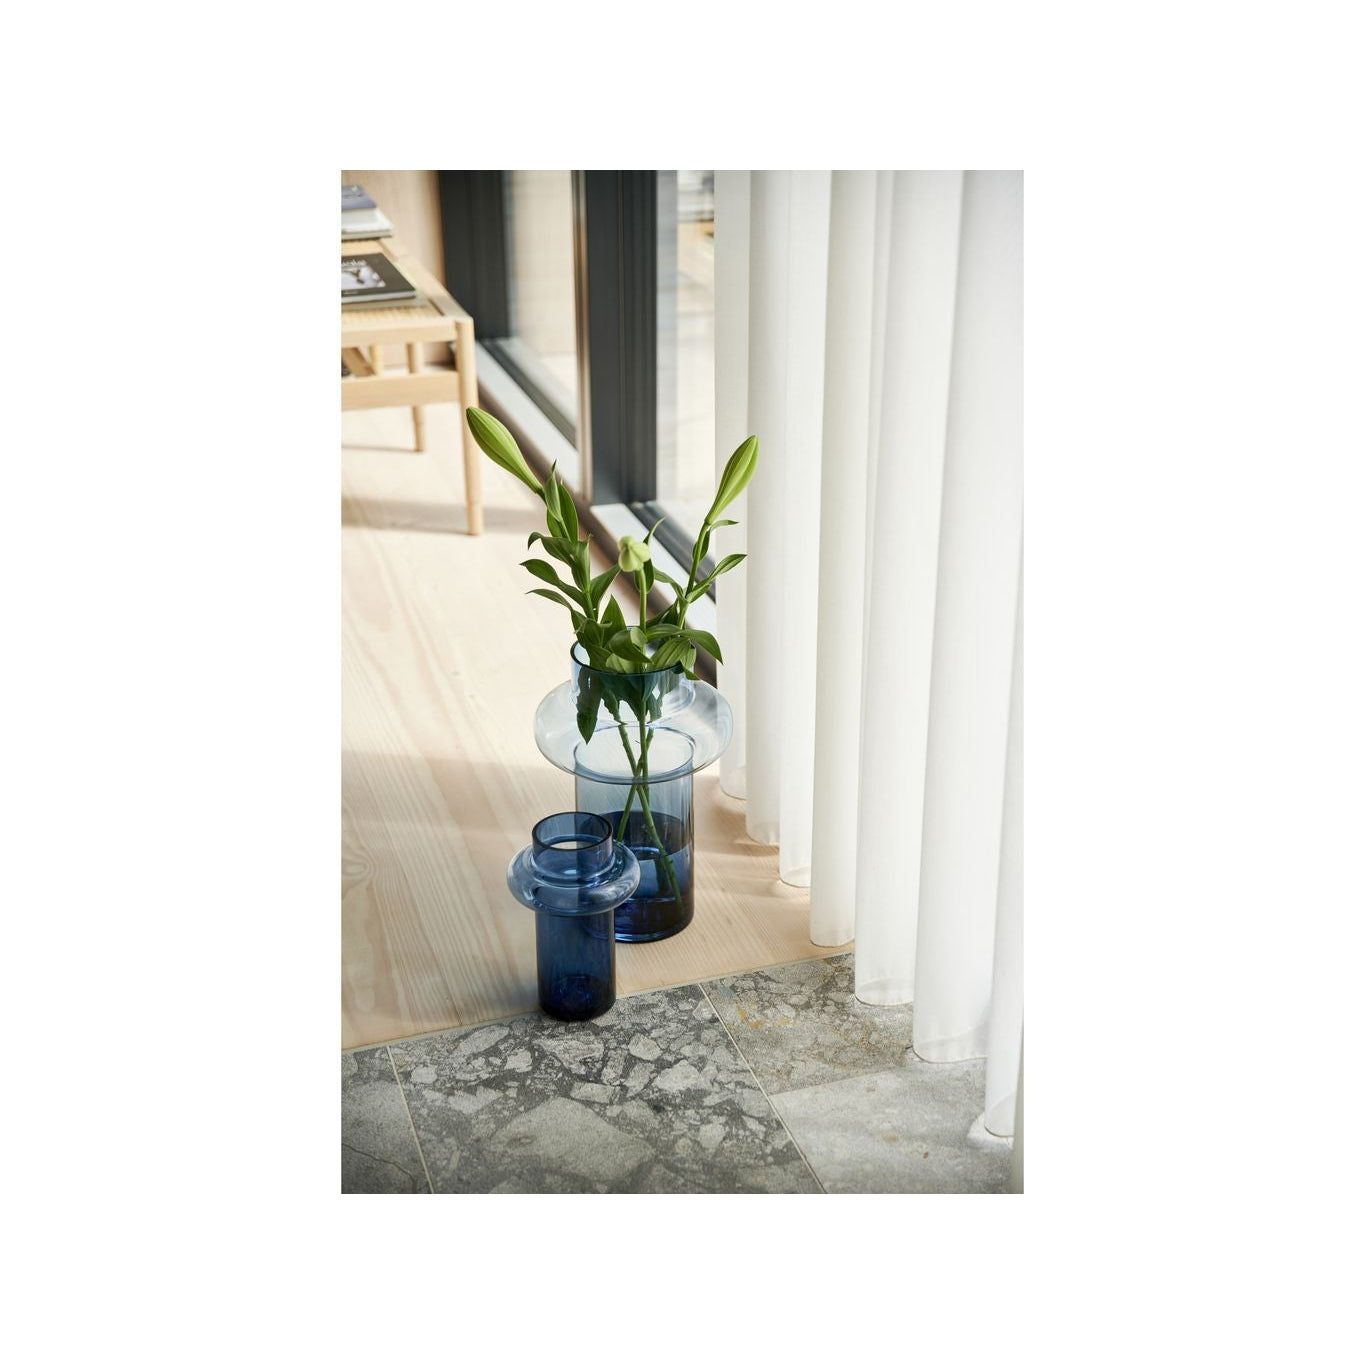 Lyngby Glas Tube Vase H: 40 Cm, Amber